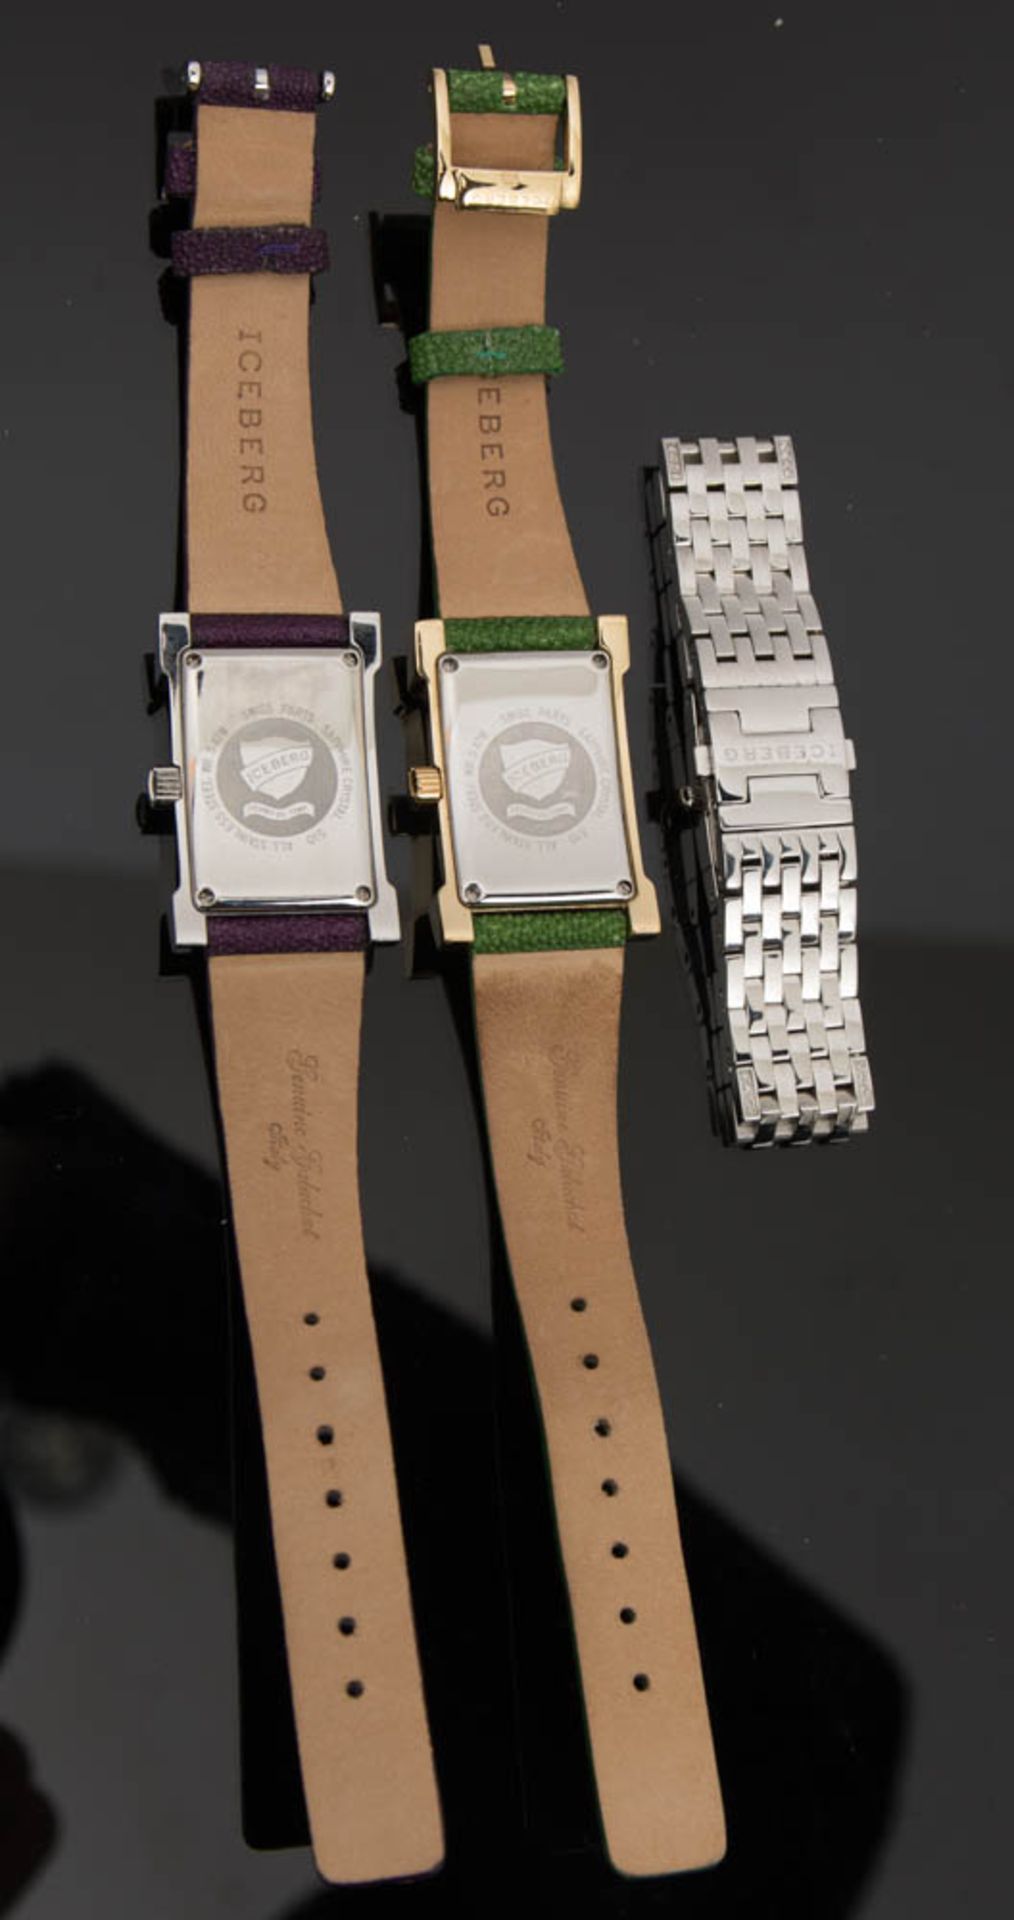 ICEBERG, 3x Damen-Armbanduhr Analog Quarz, Leder/Metall.Neuwertig und fuktionsfähig. - Bild 5 aus 6